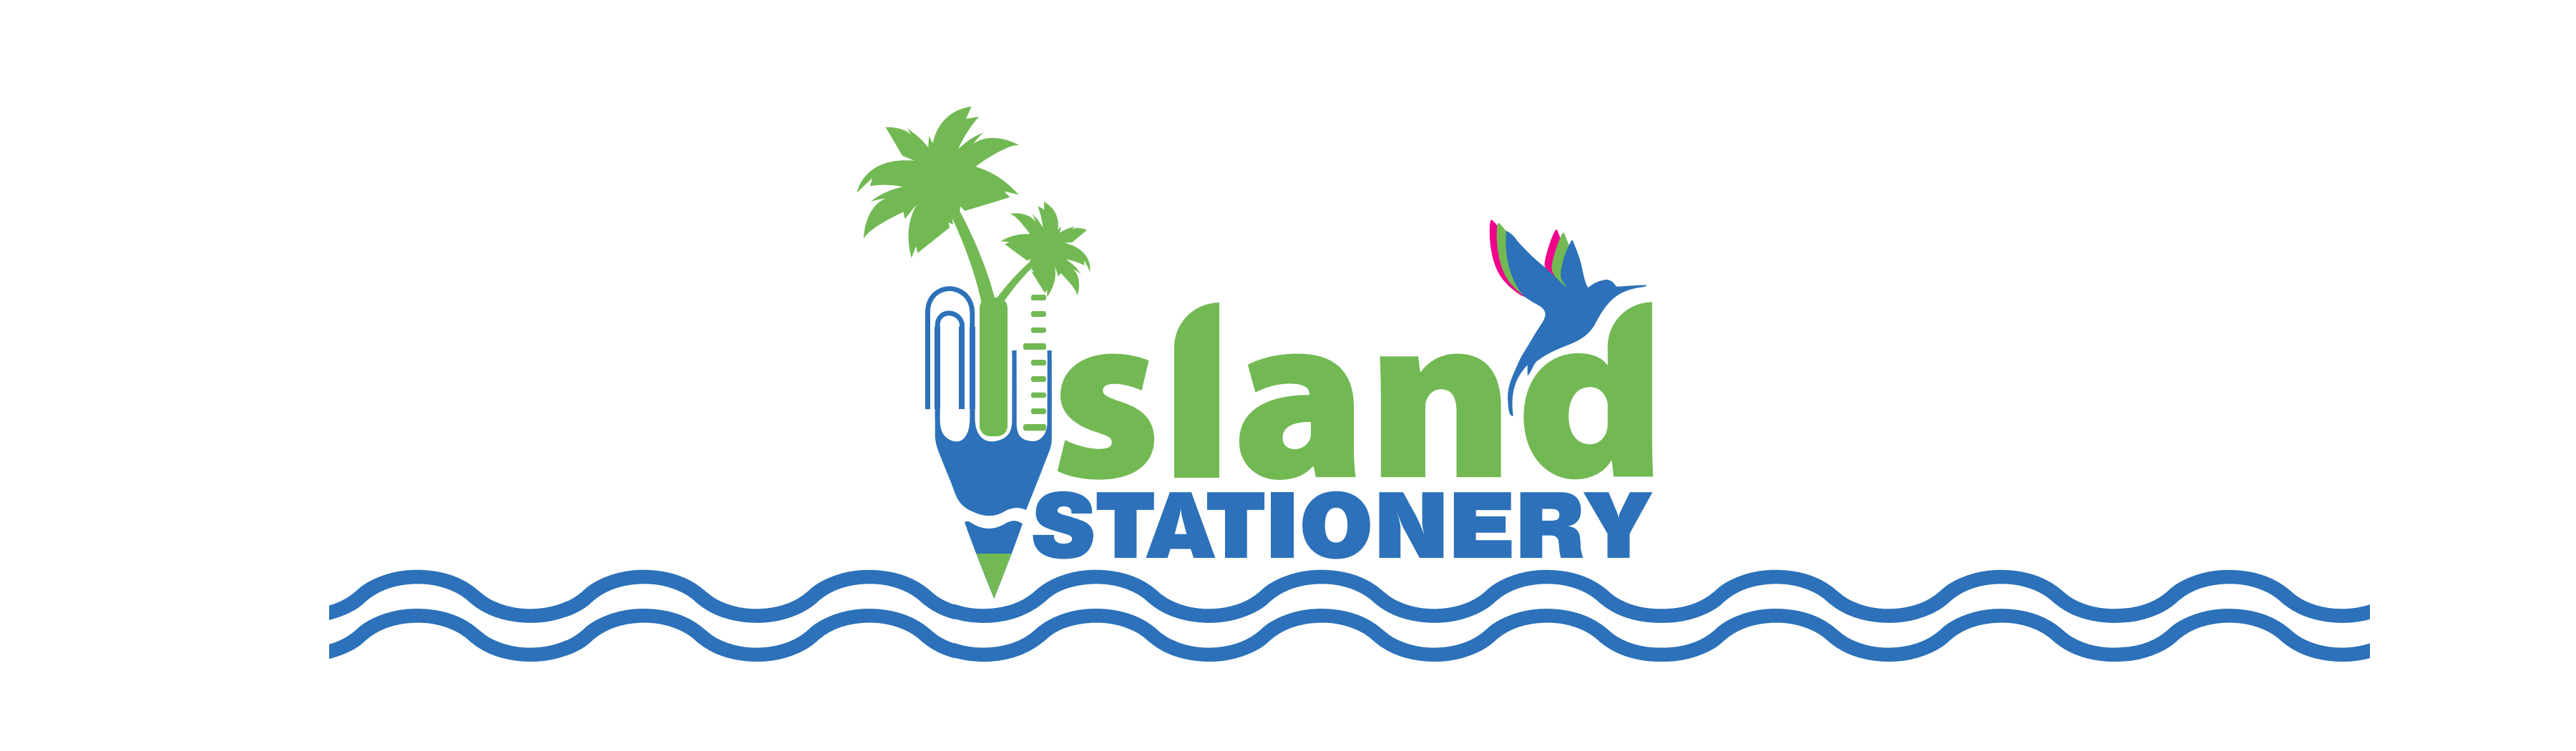 Island Stationery